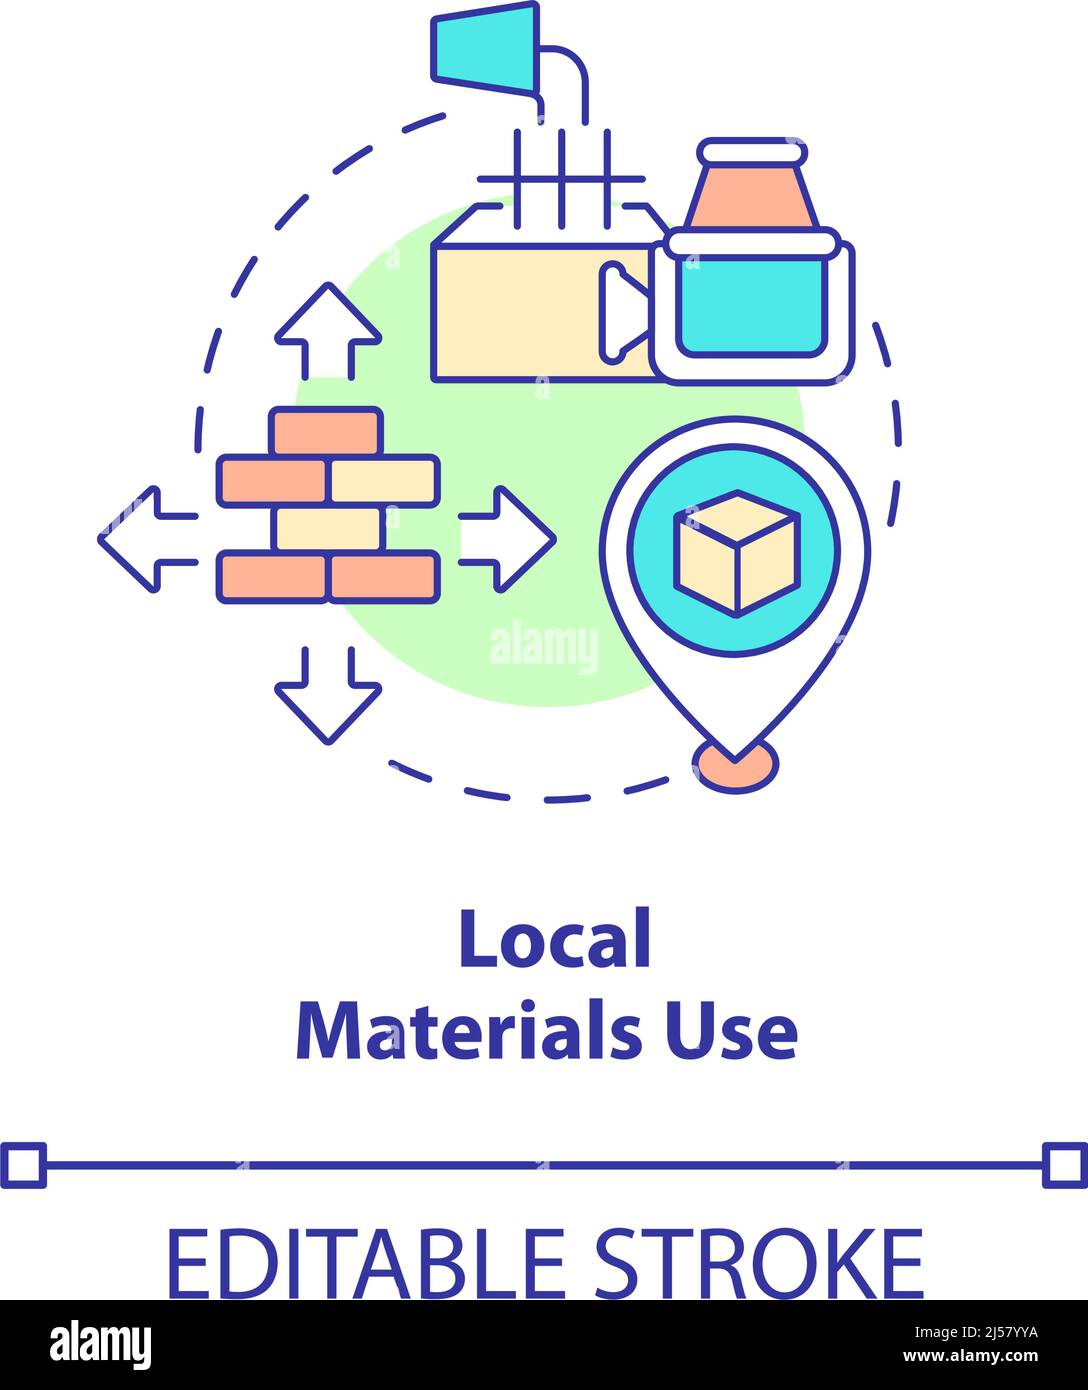 Local materials use concept icon Stock Vector